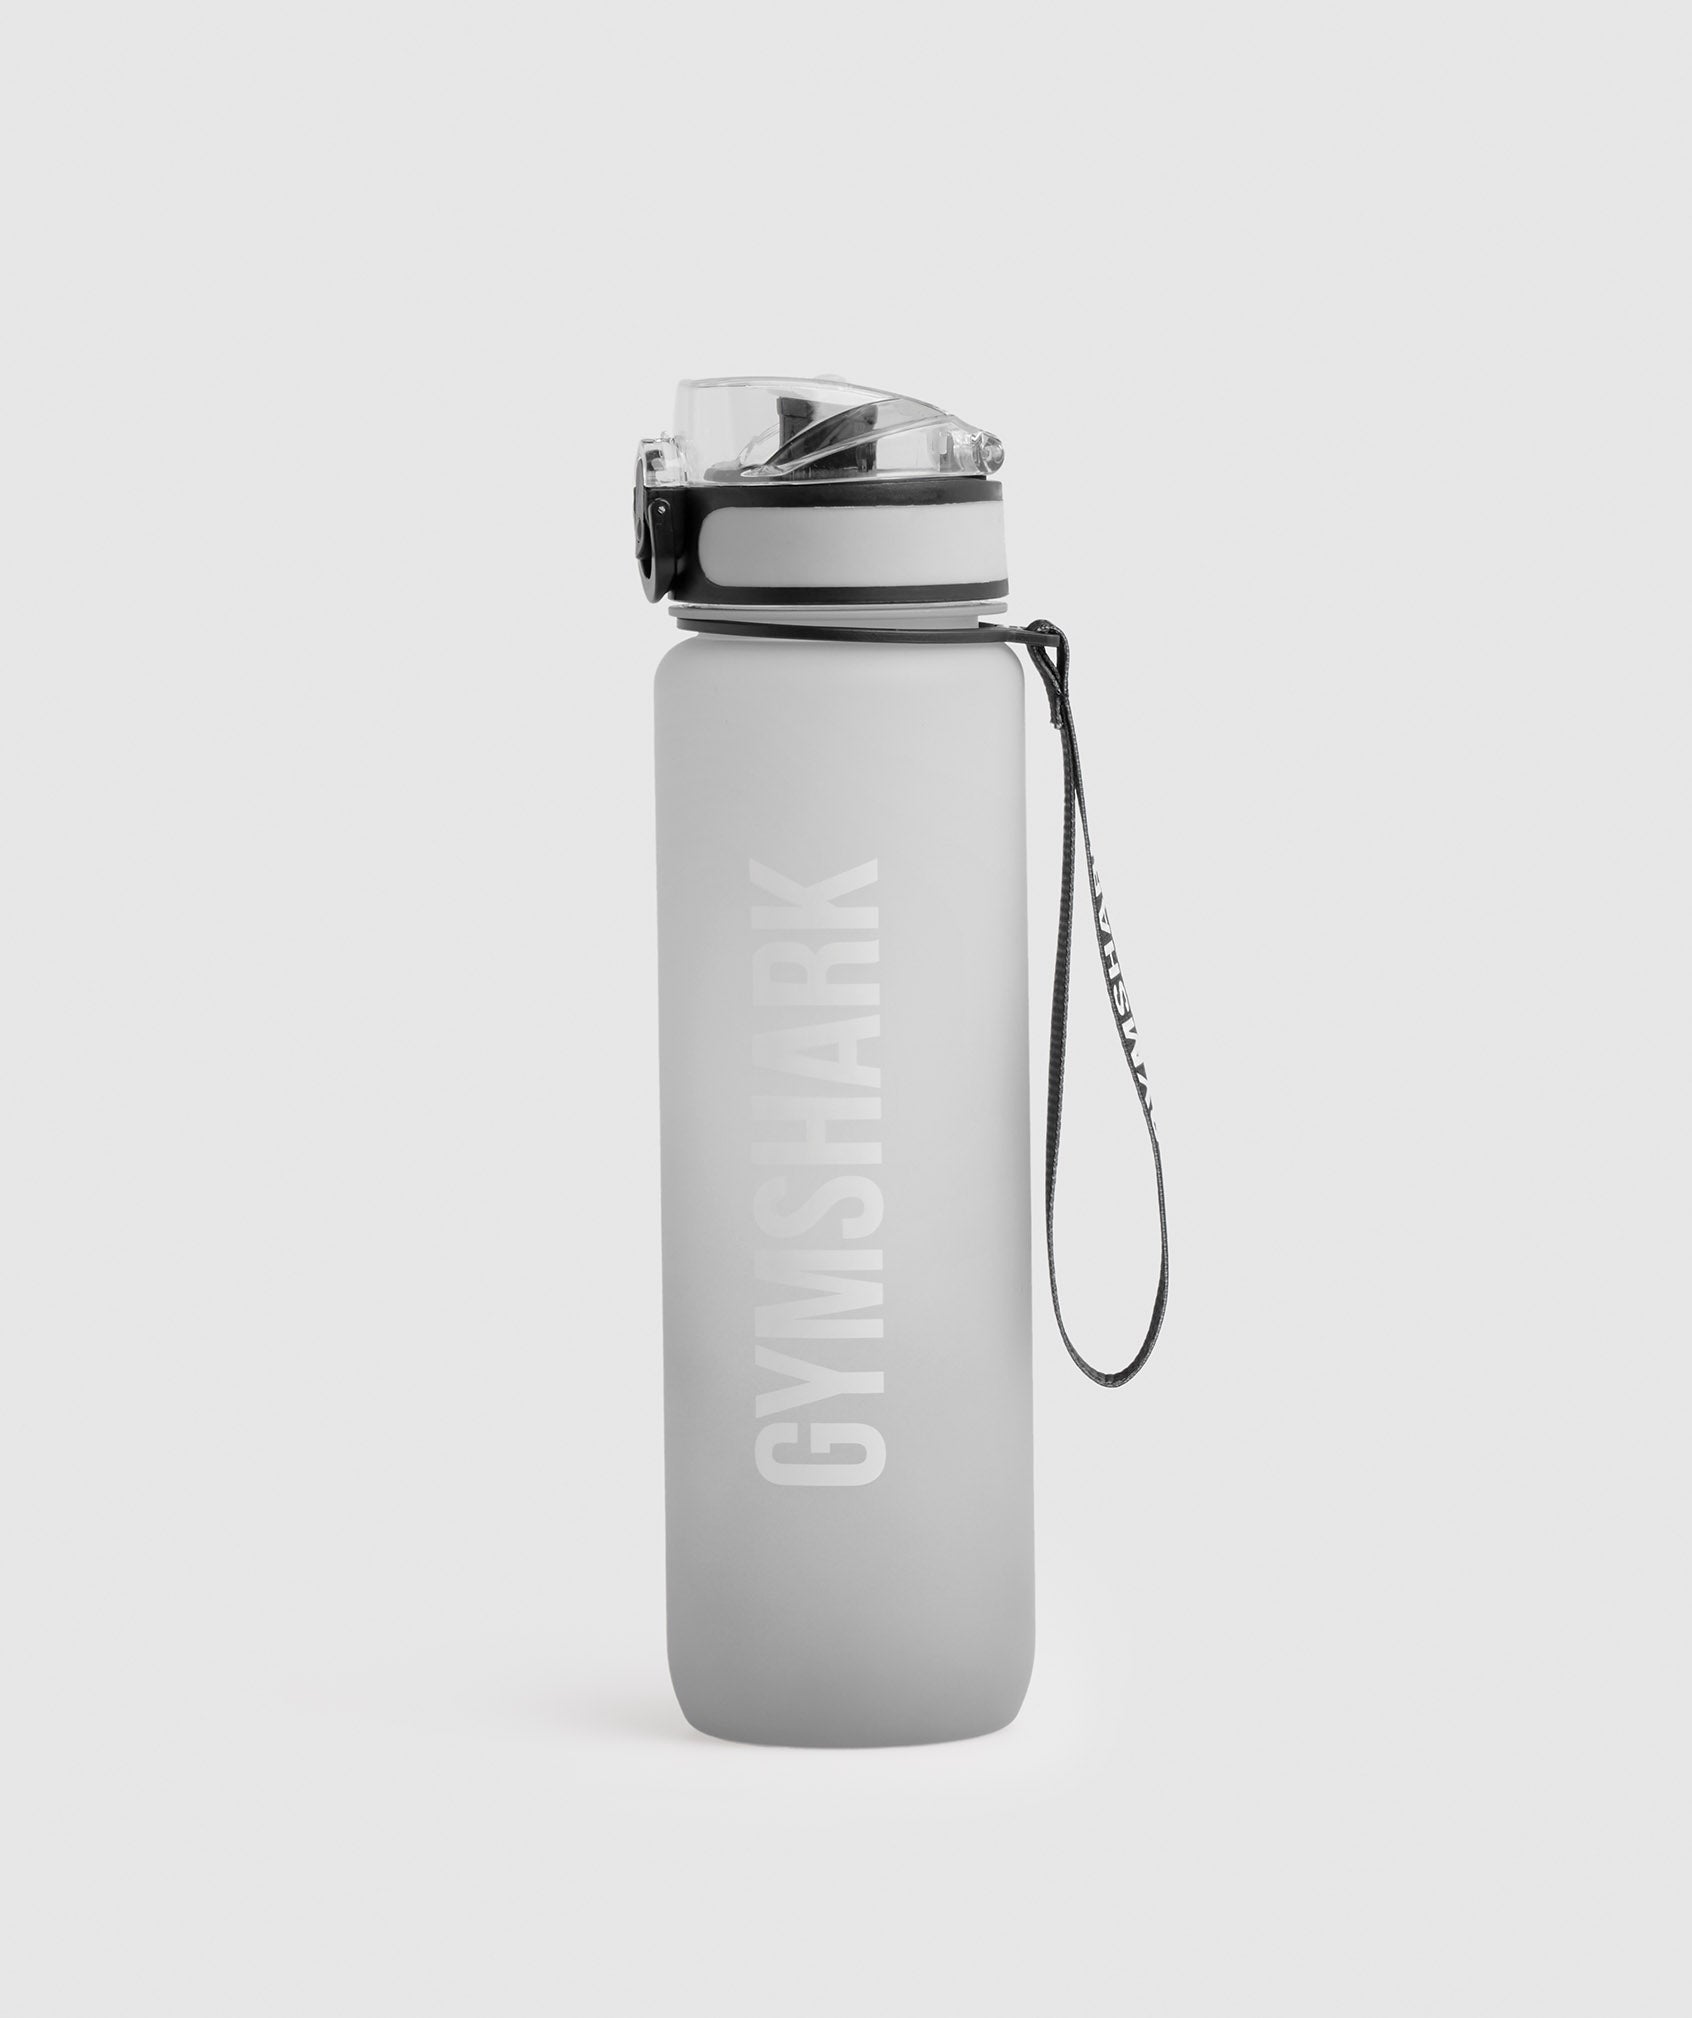 GrandTies 24oz Sports Stainless Steel Water Bottle - Stone Grey